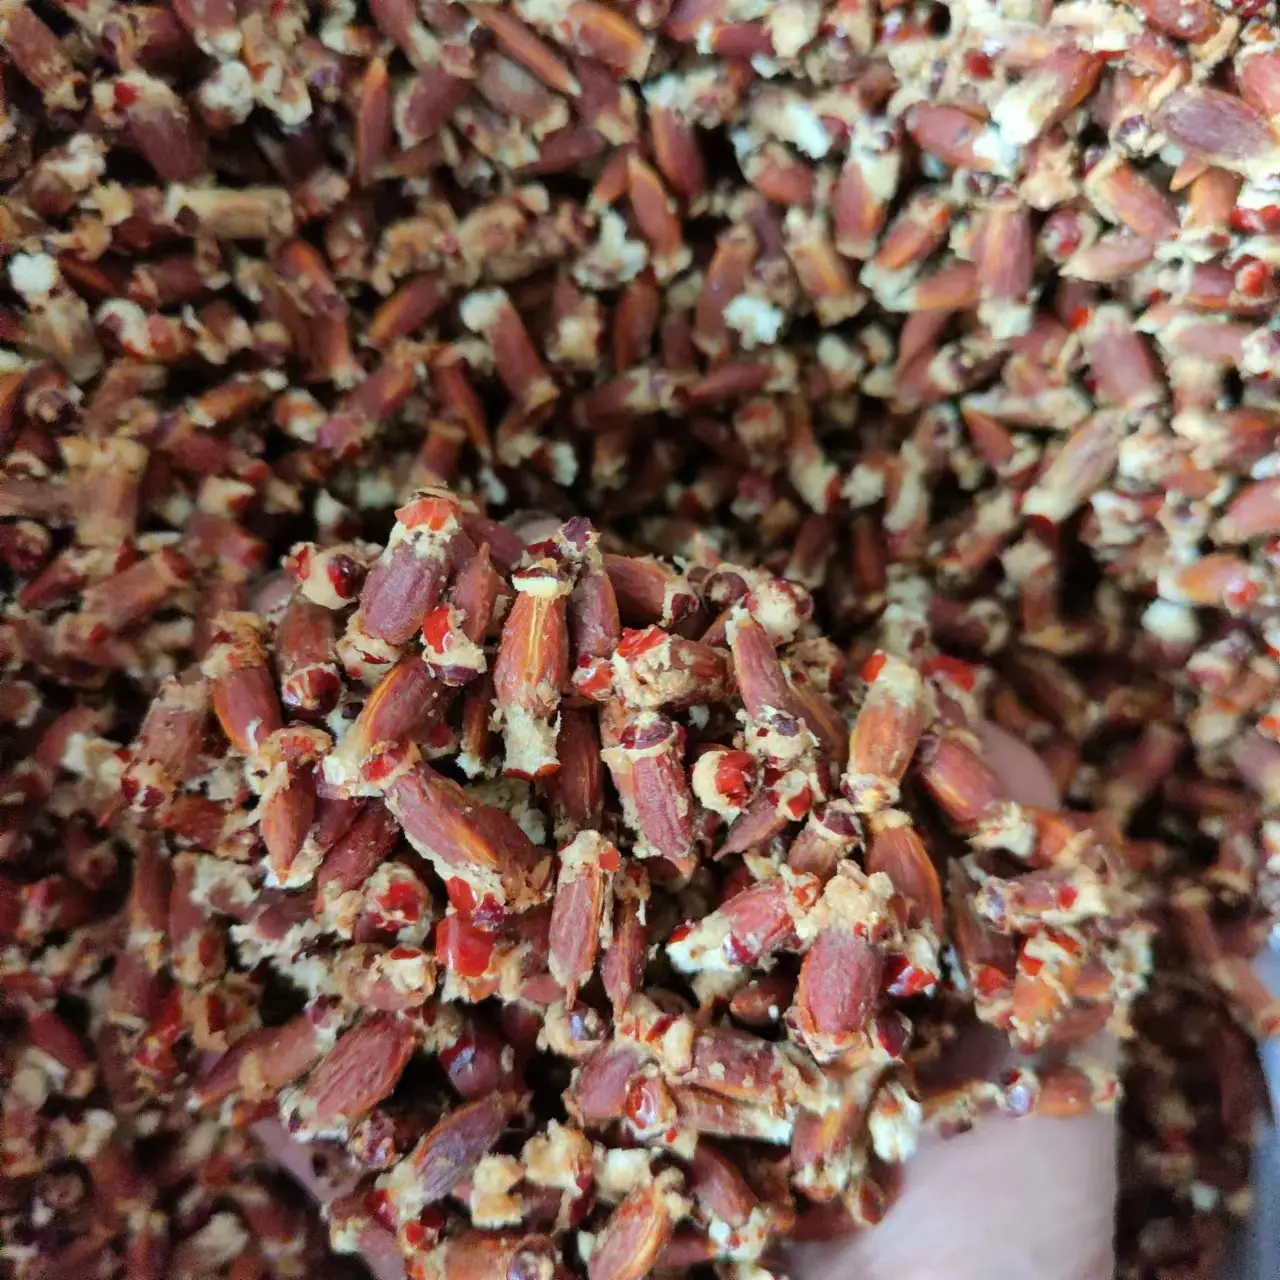 Zao he天然中国の赤いナツメヤシの種子ハーブ用の一般的なナツメの種子